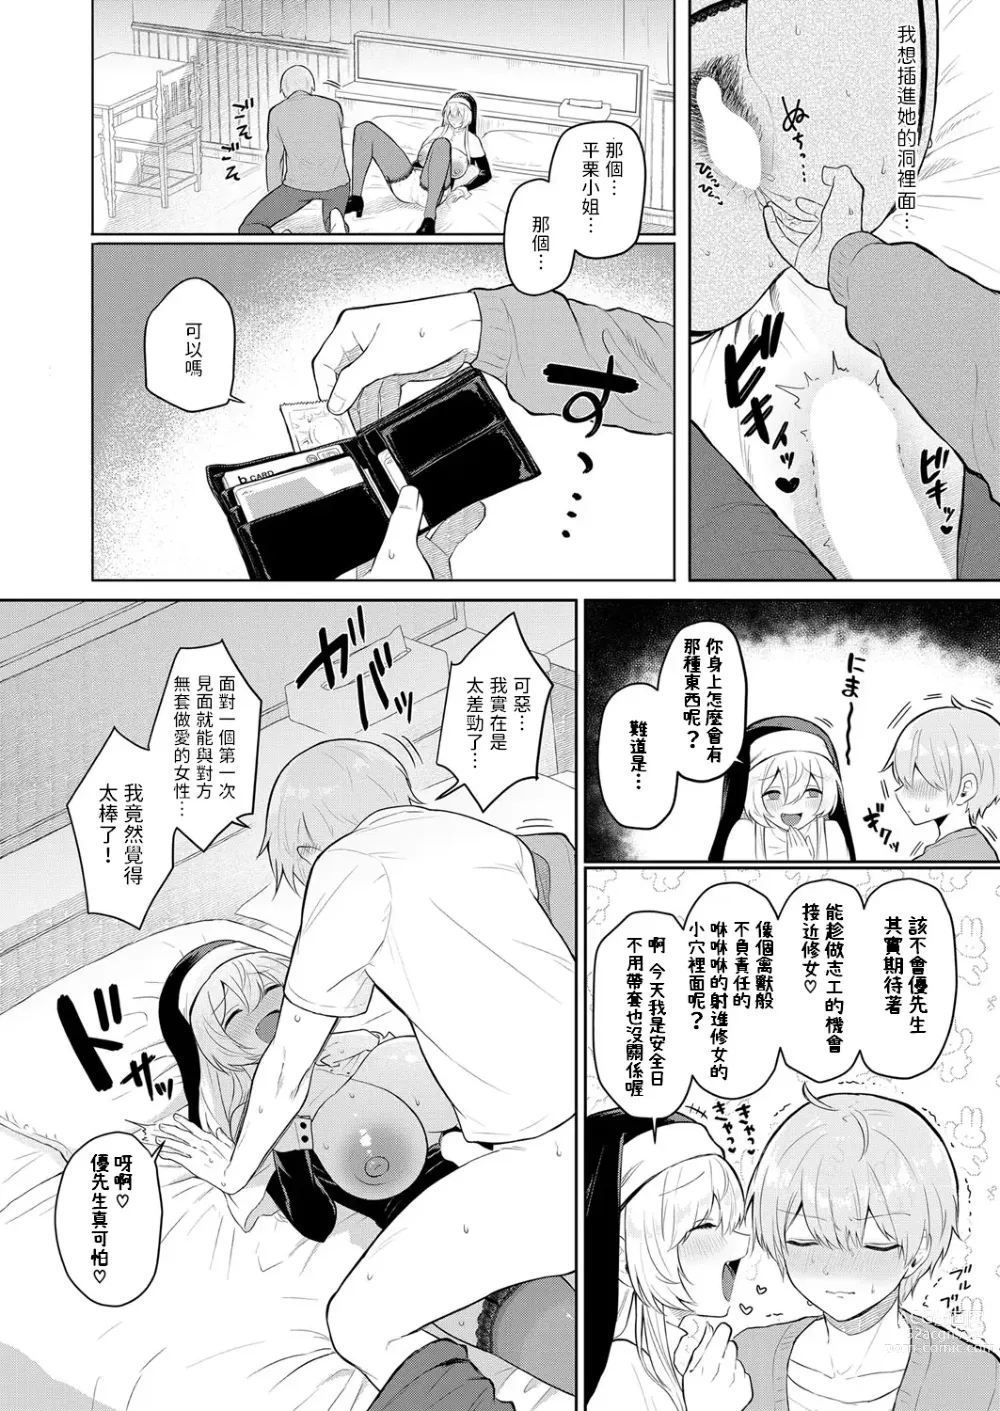 Page 14 of manga Nukumori Fukushikai Chinpopo